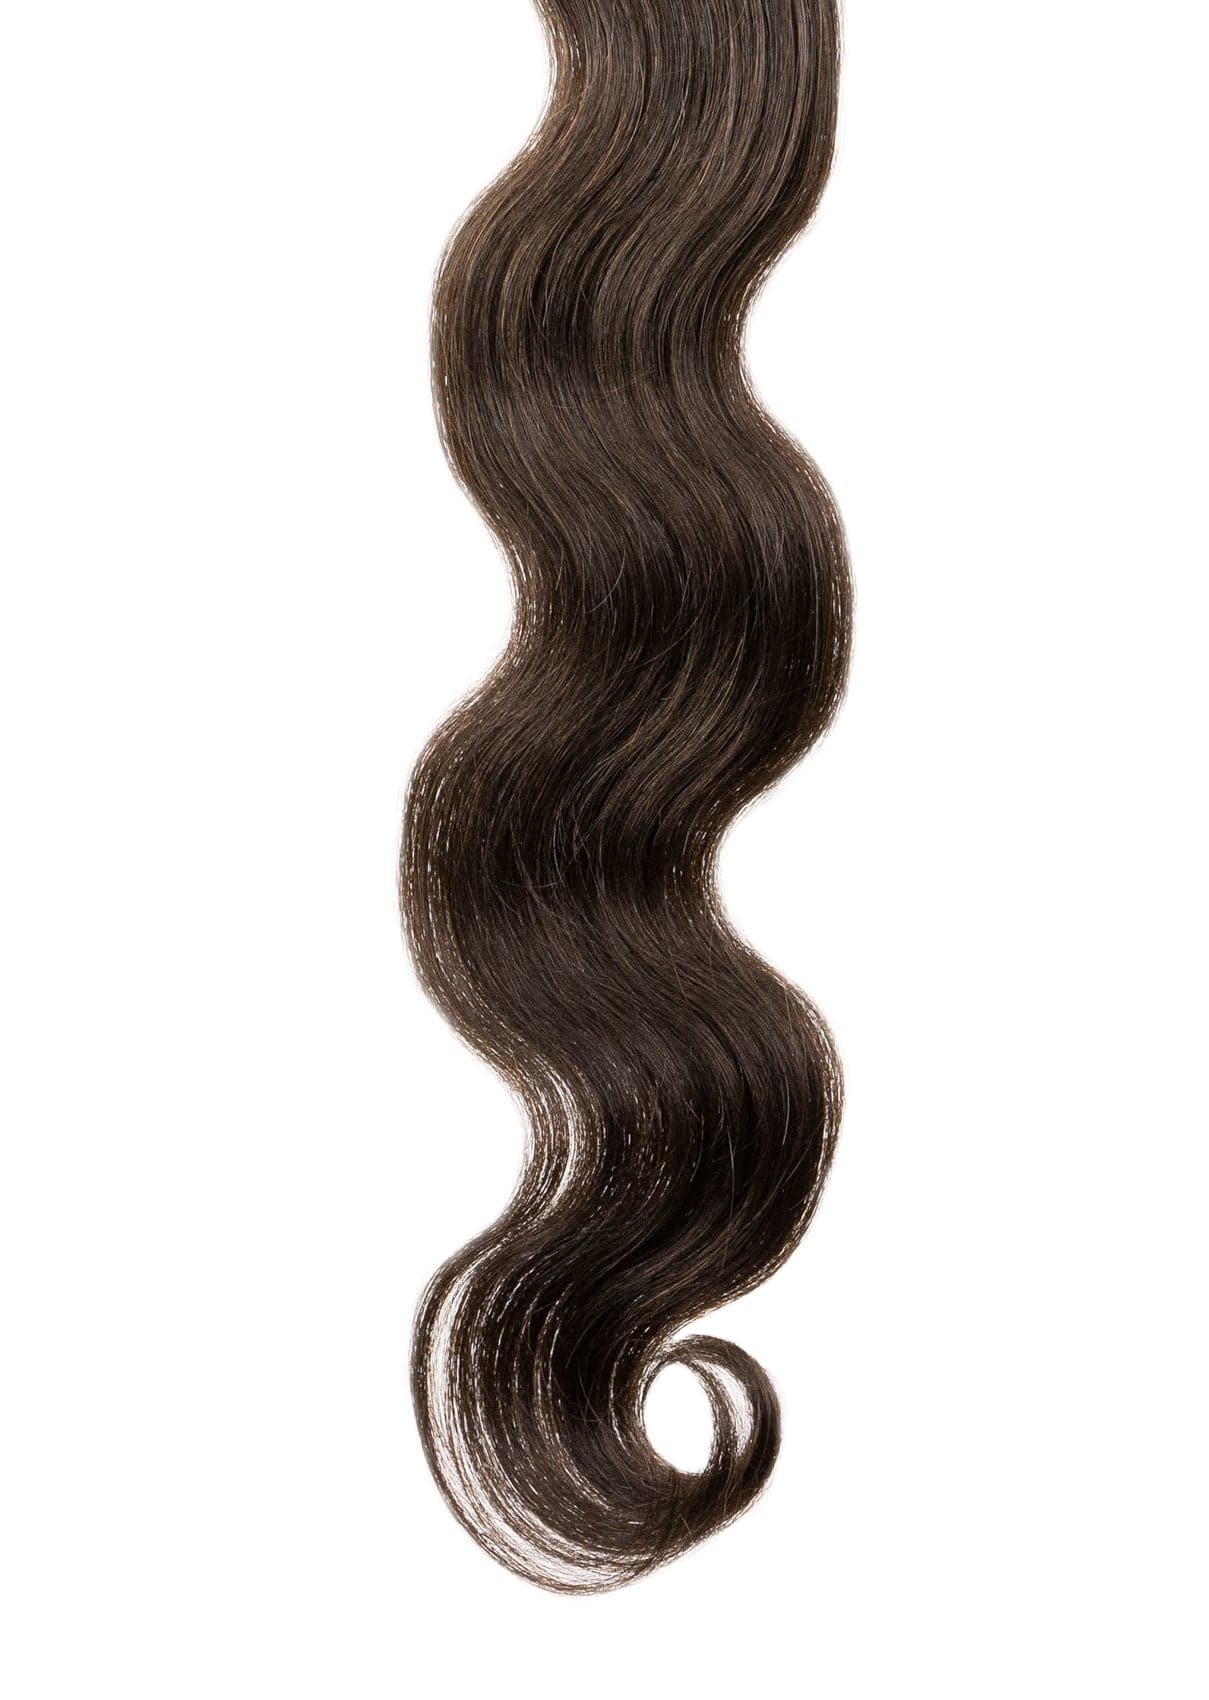 Kera-Link (Fusion) Hair Extension Starter Kit - Donna Bella Hair